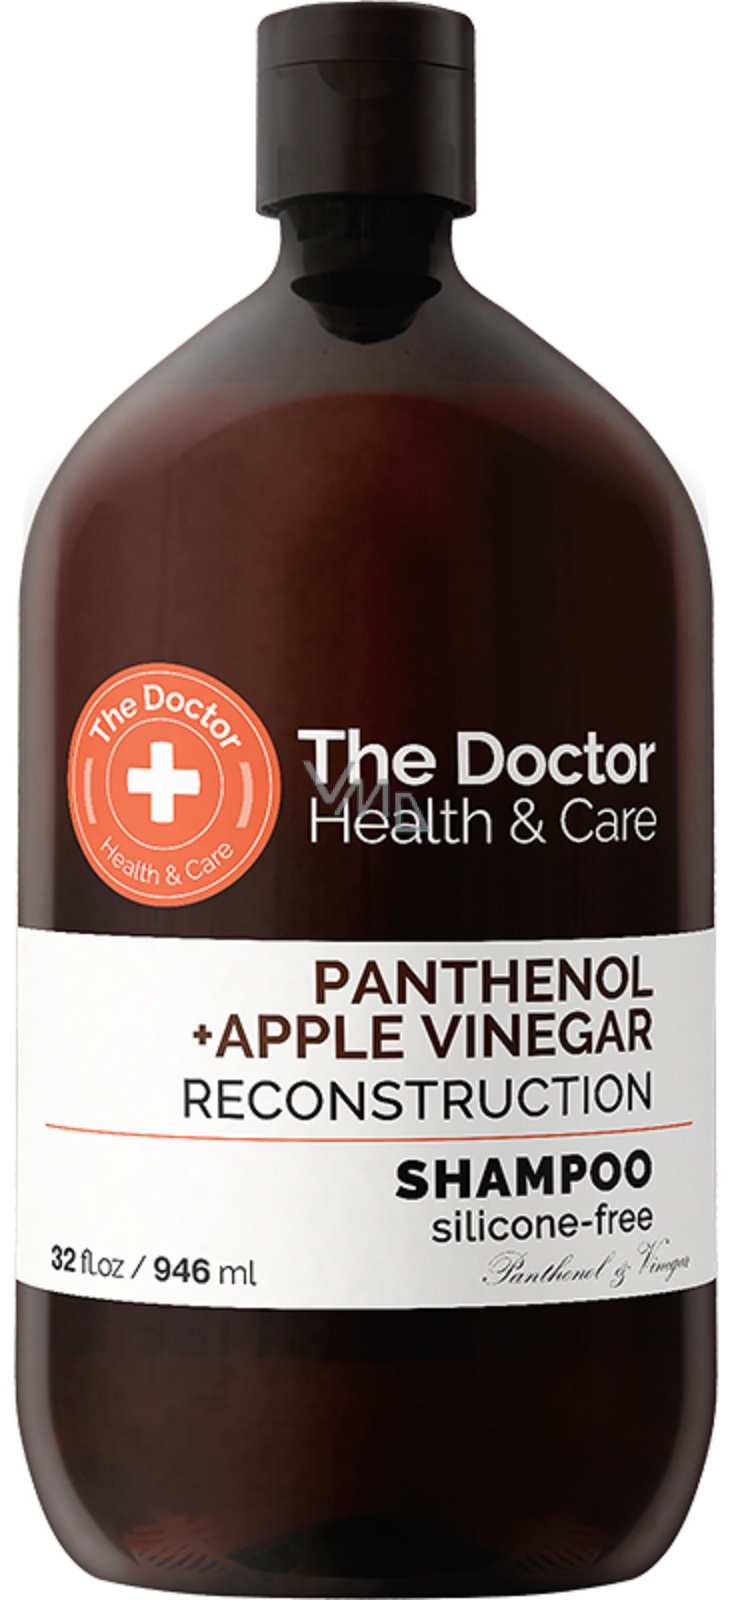 The Doctor Panthenol + Apple Vinegar Reconstruction Shampoo